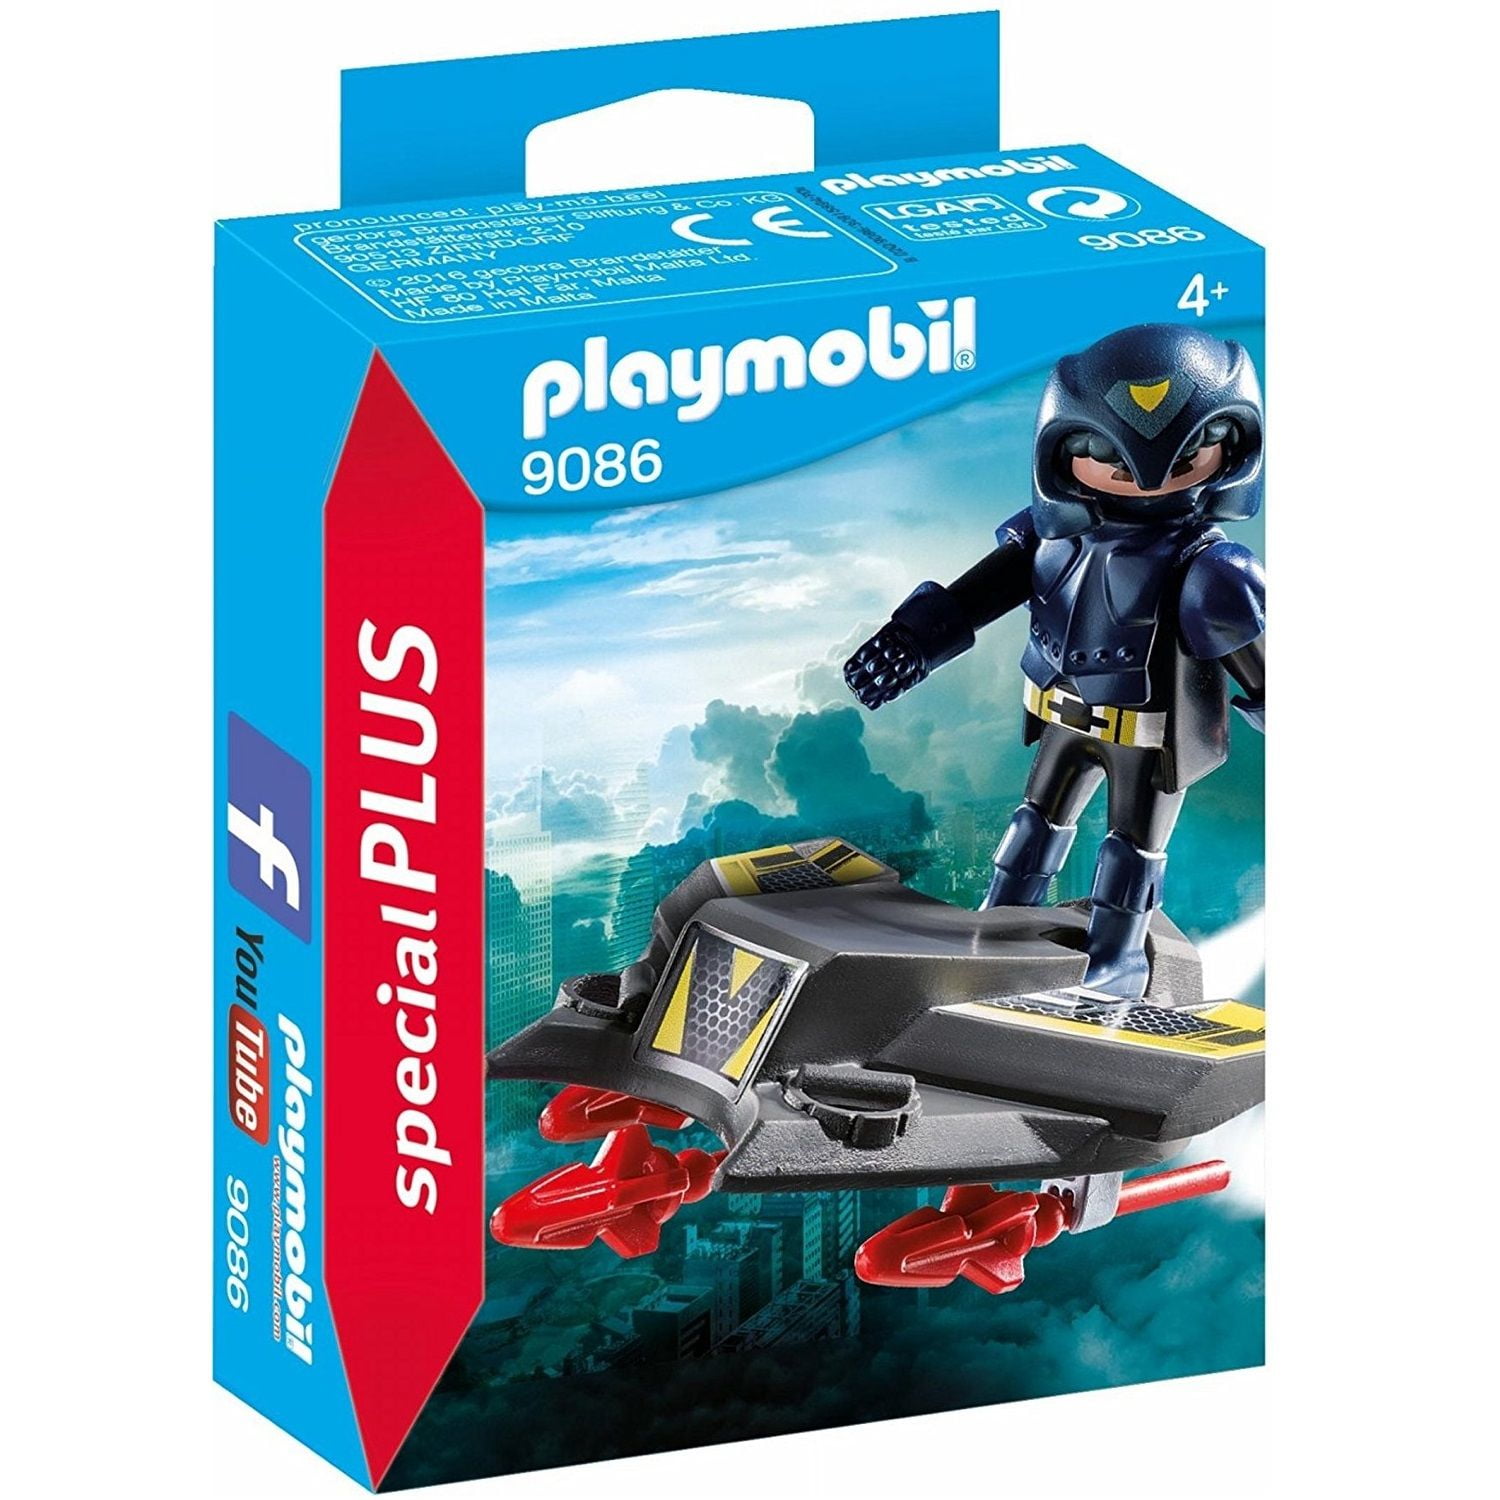 Miniature Se igennem antyder Sky Knight with Jet Special Plus - Play Set by Playmobil (9086) -  Walmart.com